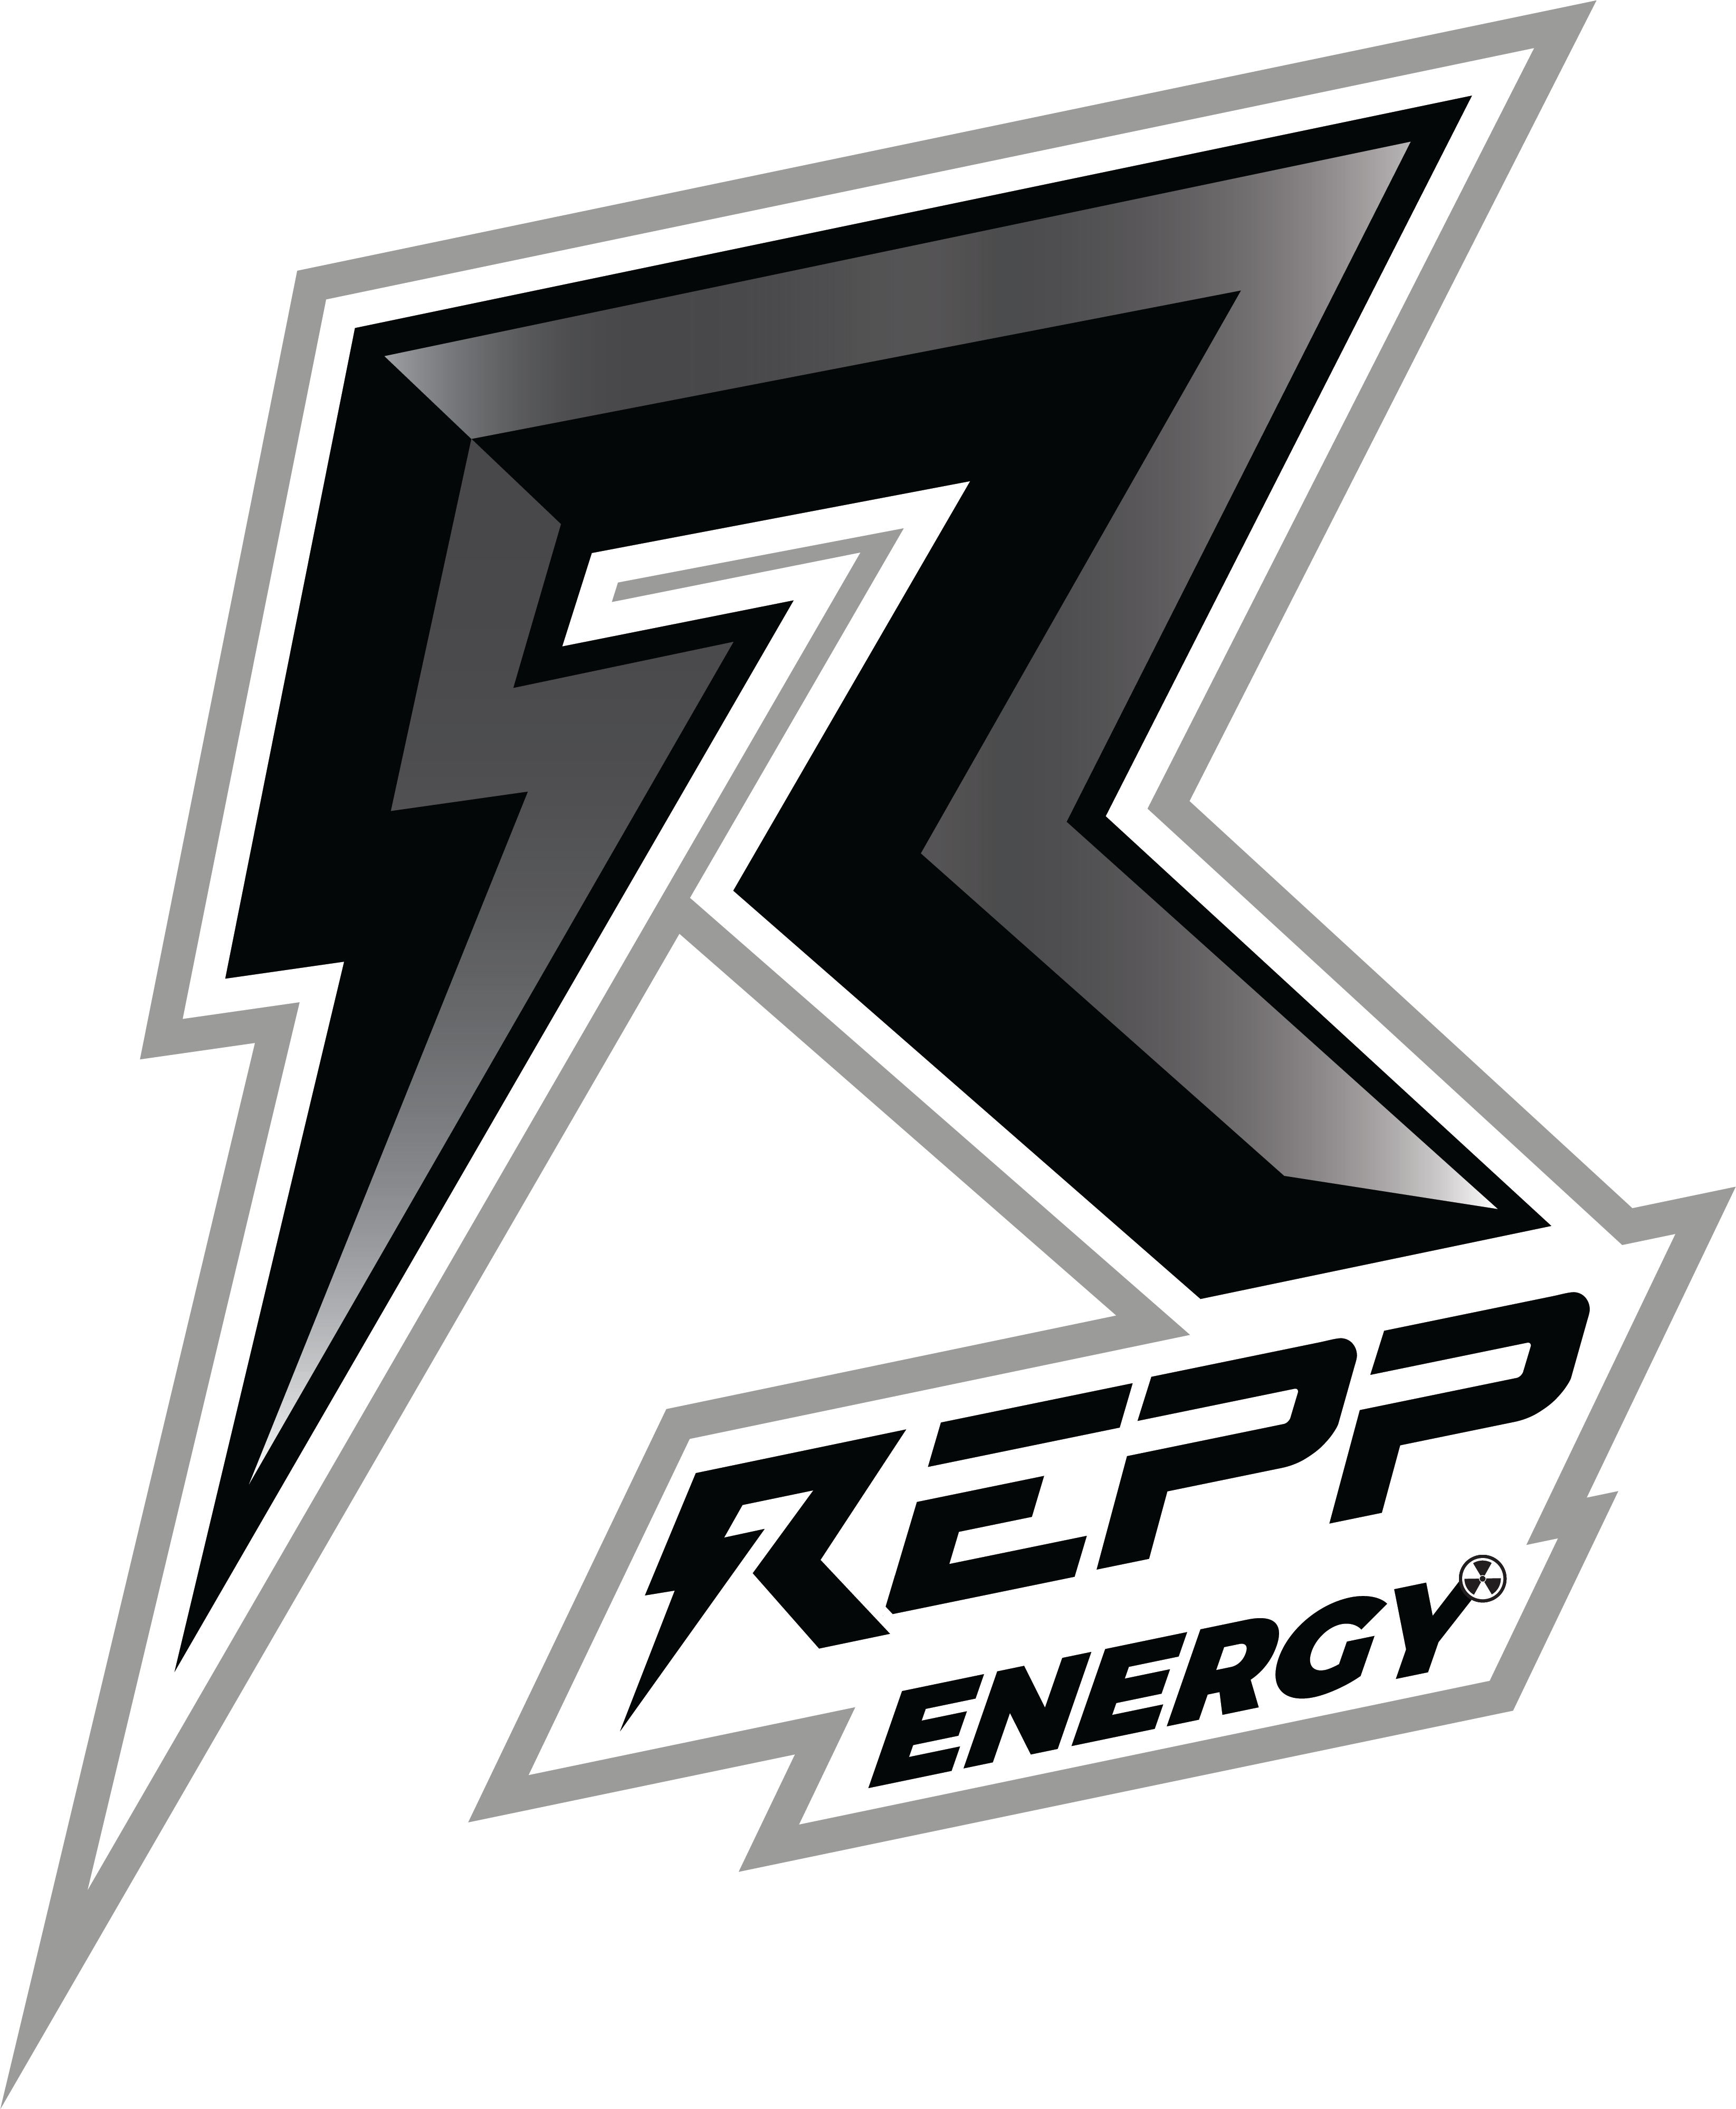 Repp Energy